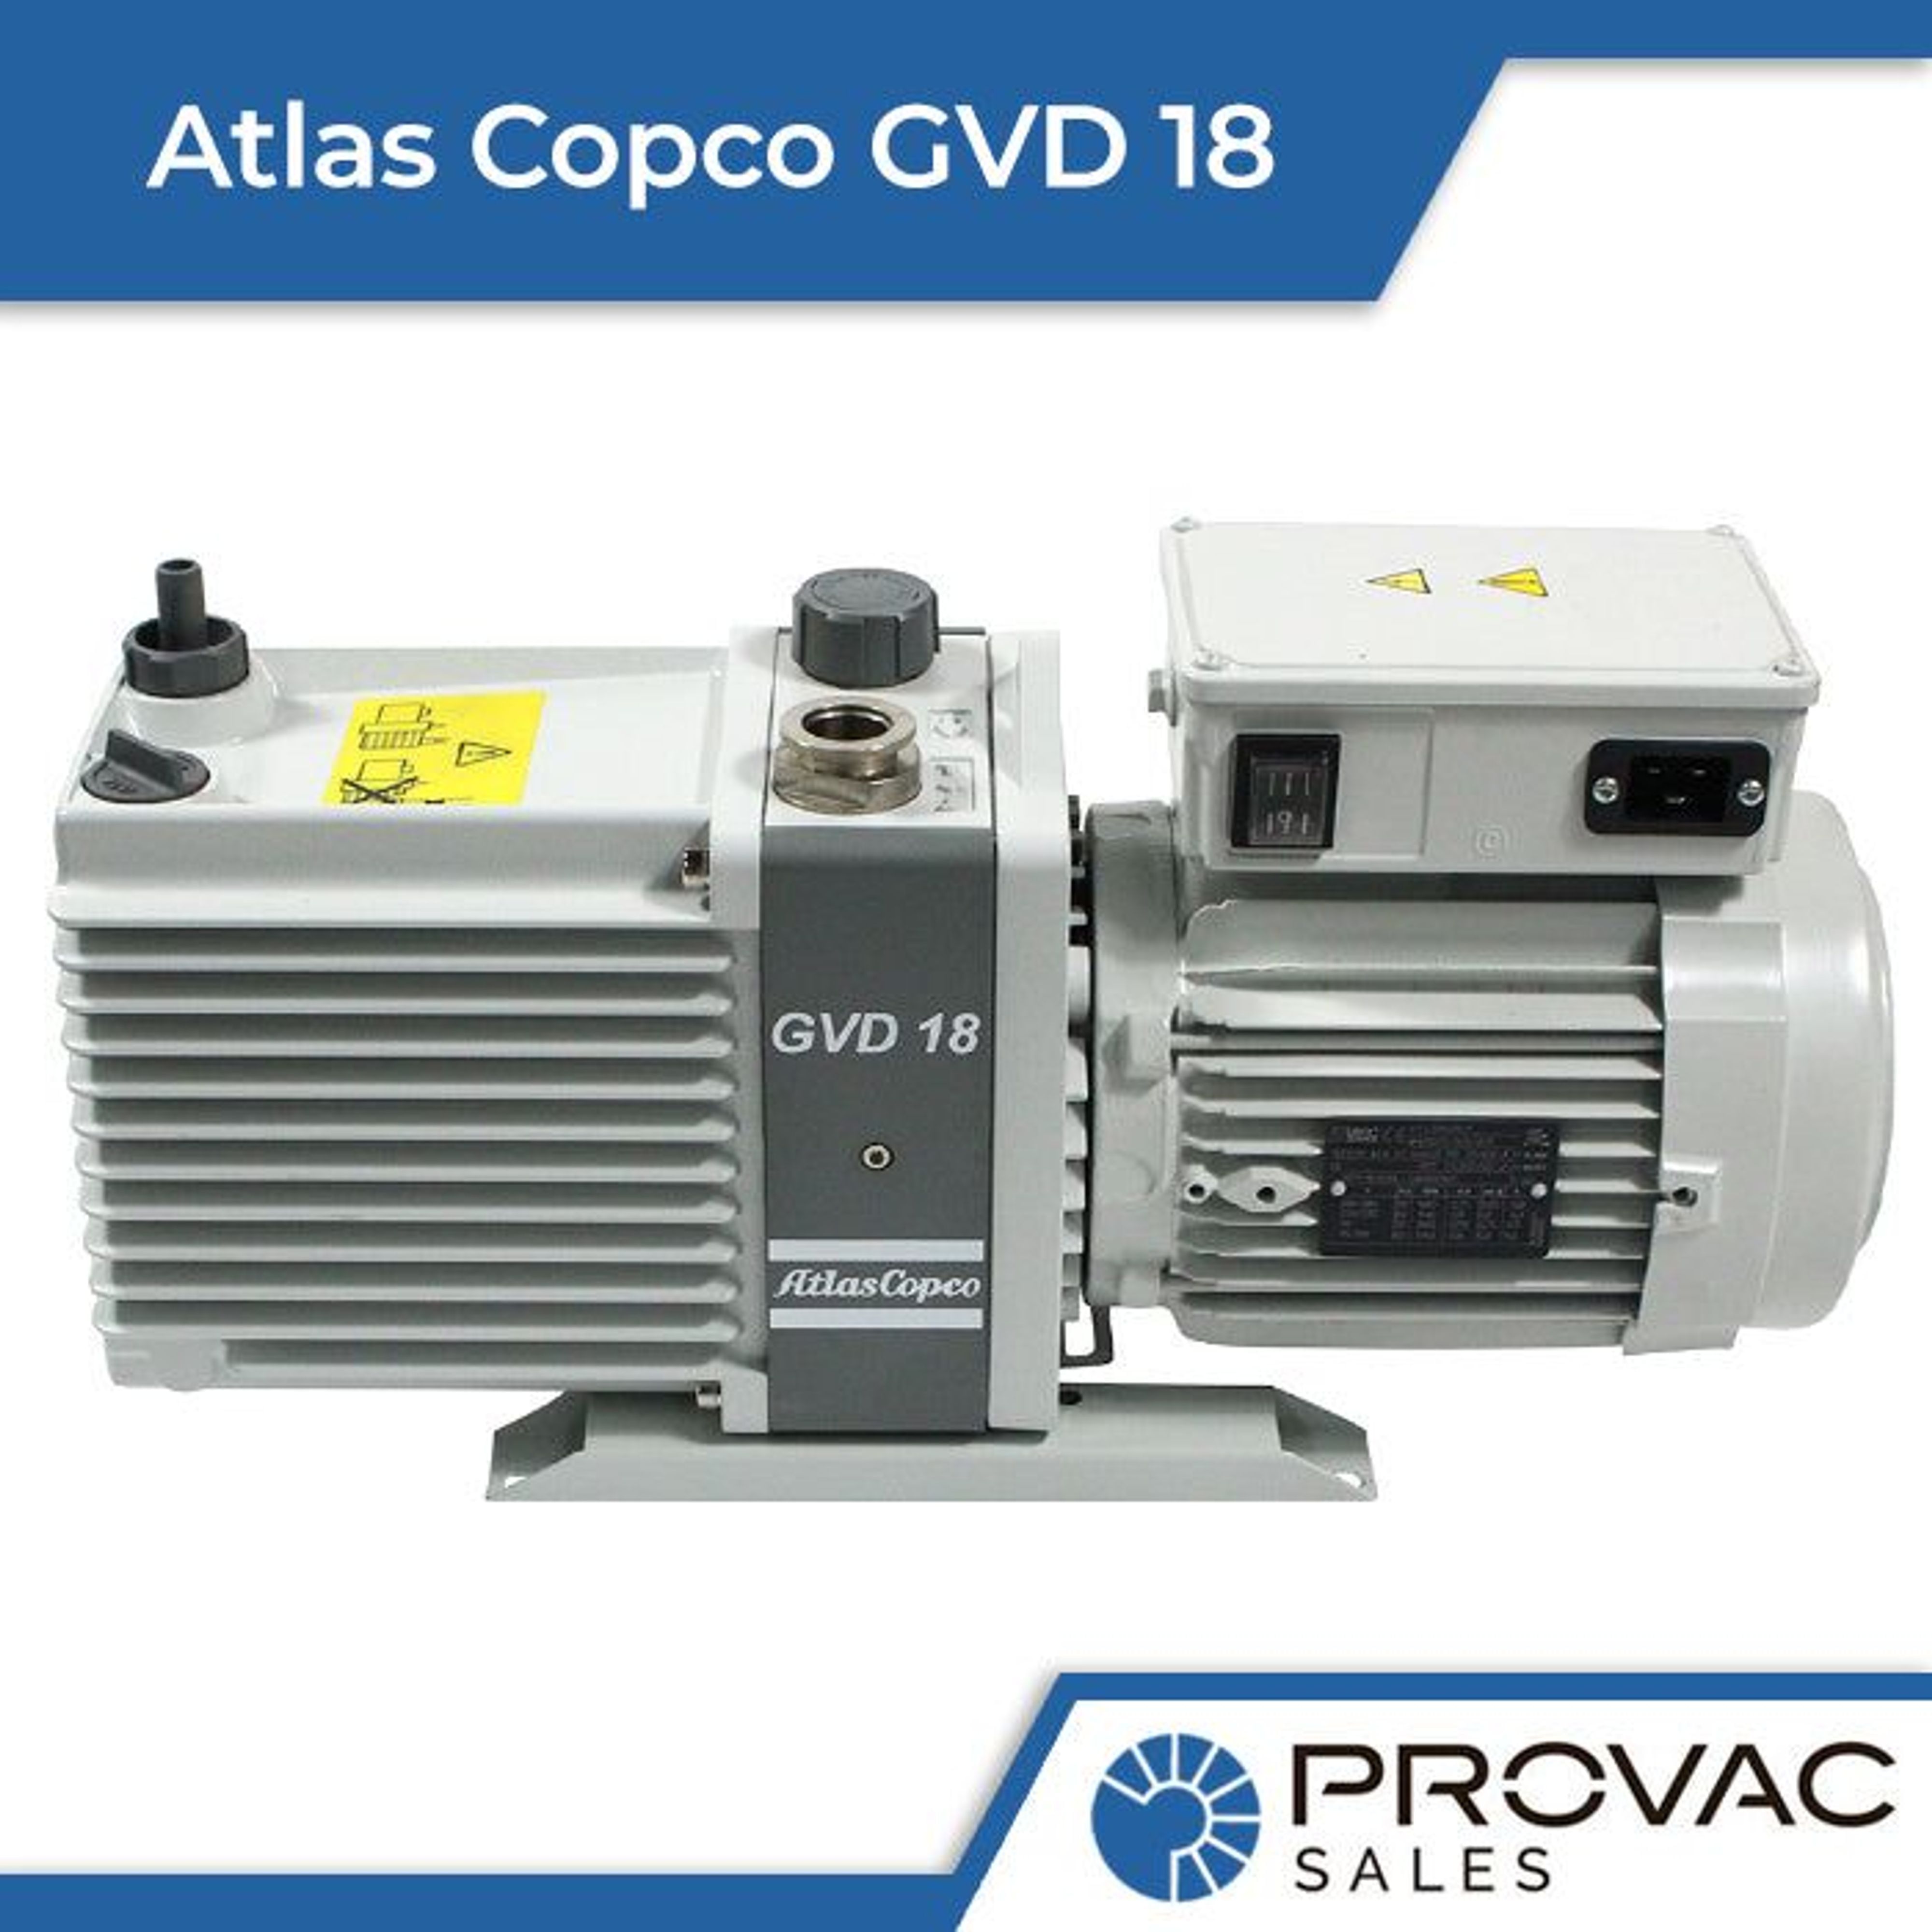 On Sale Now: Atlas Copco GVD 18 Rotary Vane Pump Background